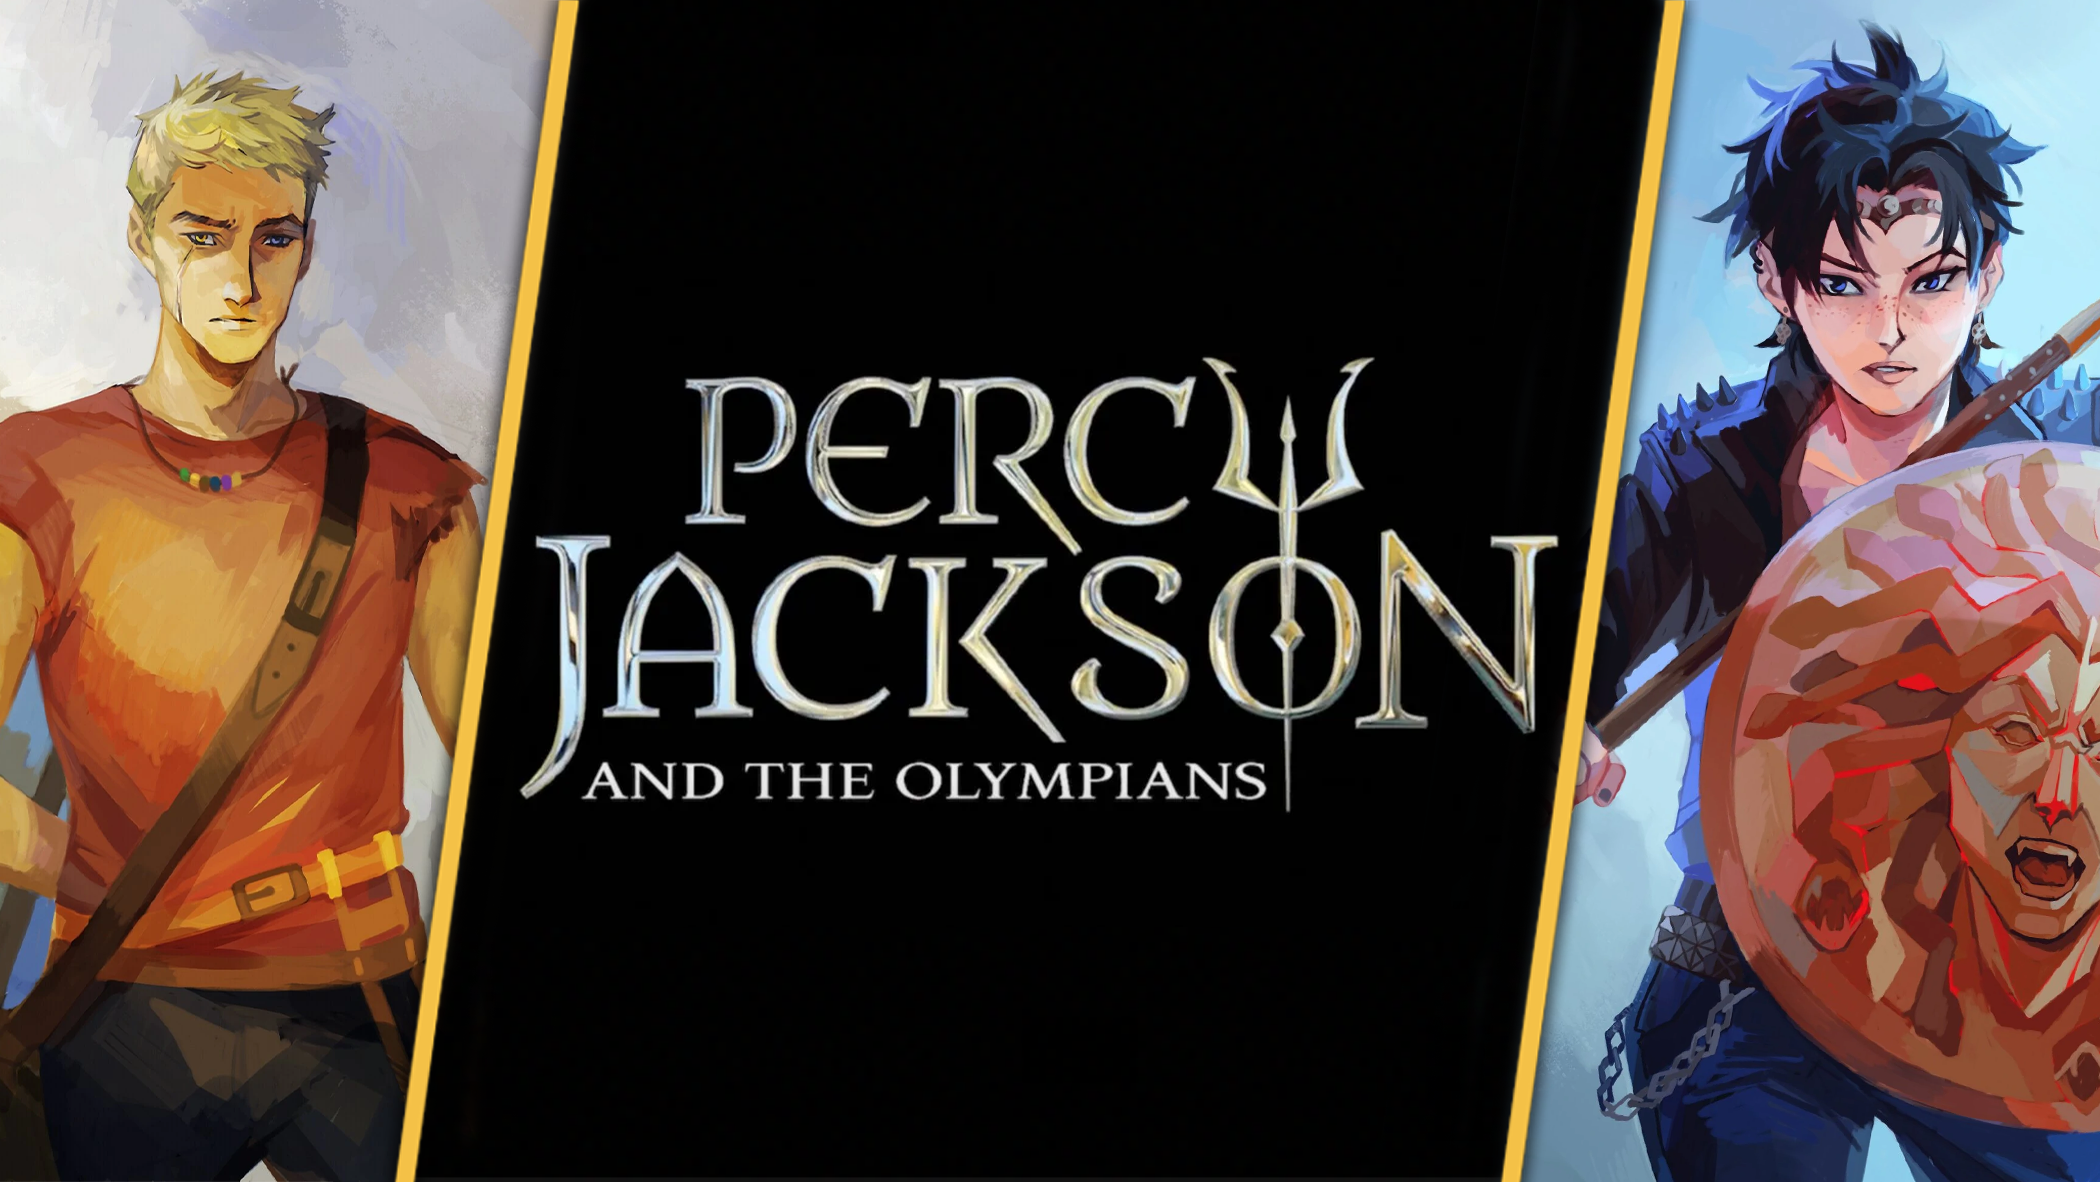 Percy Jackson Luke castellan Thalia grace